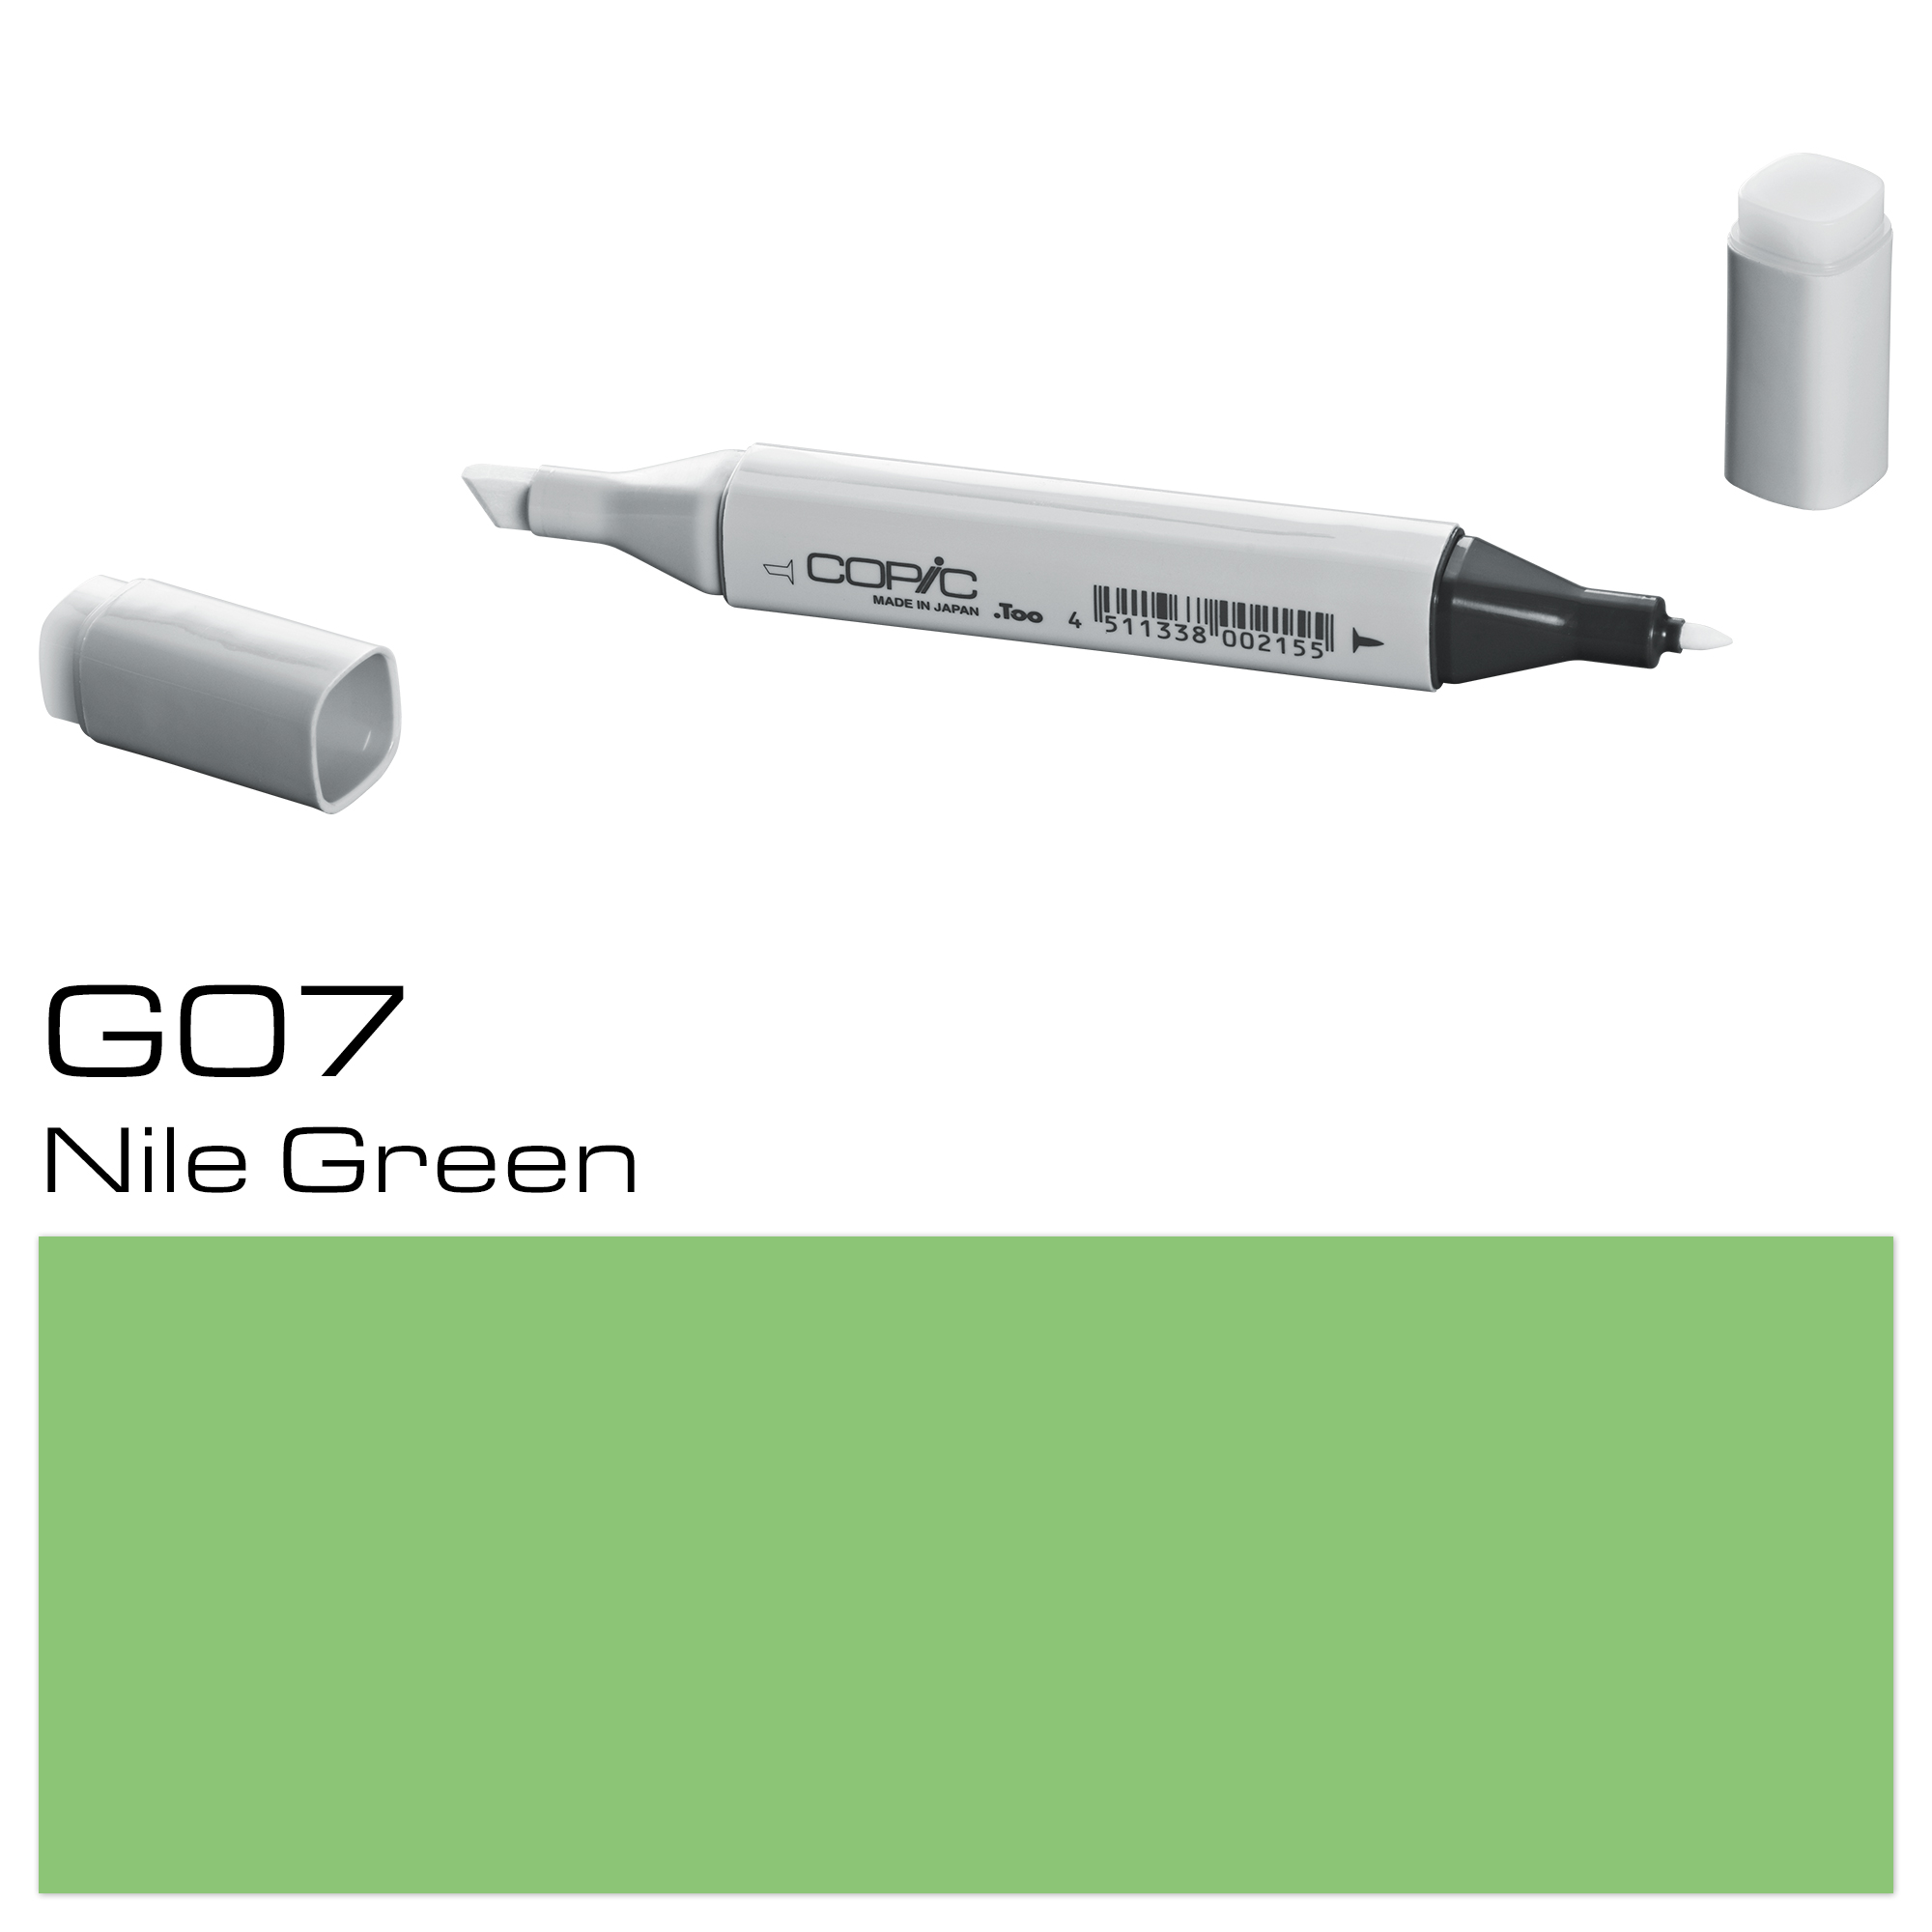 COPIC MARKER NILE GREEN G07